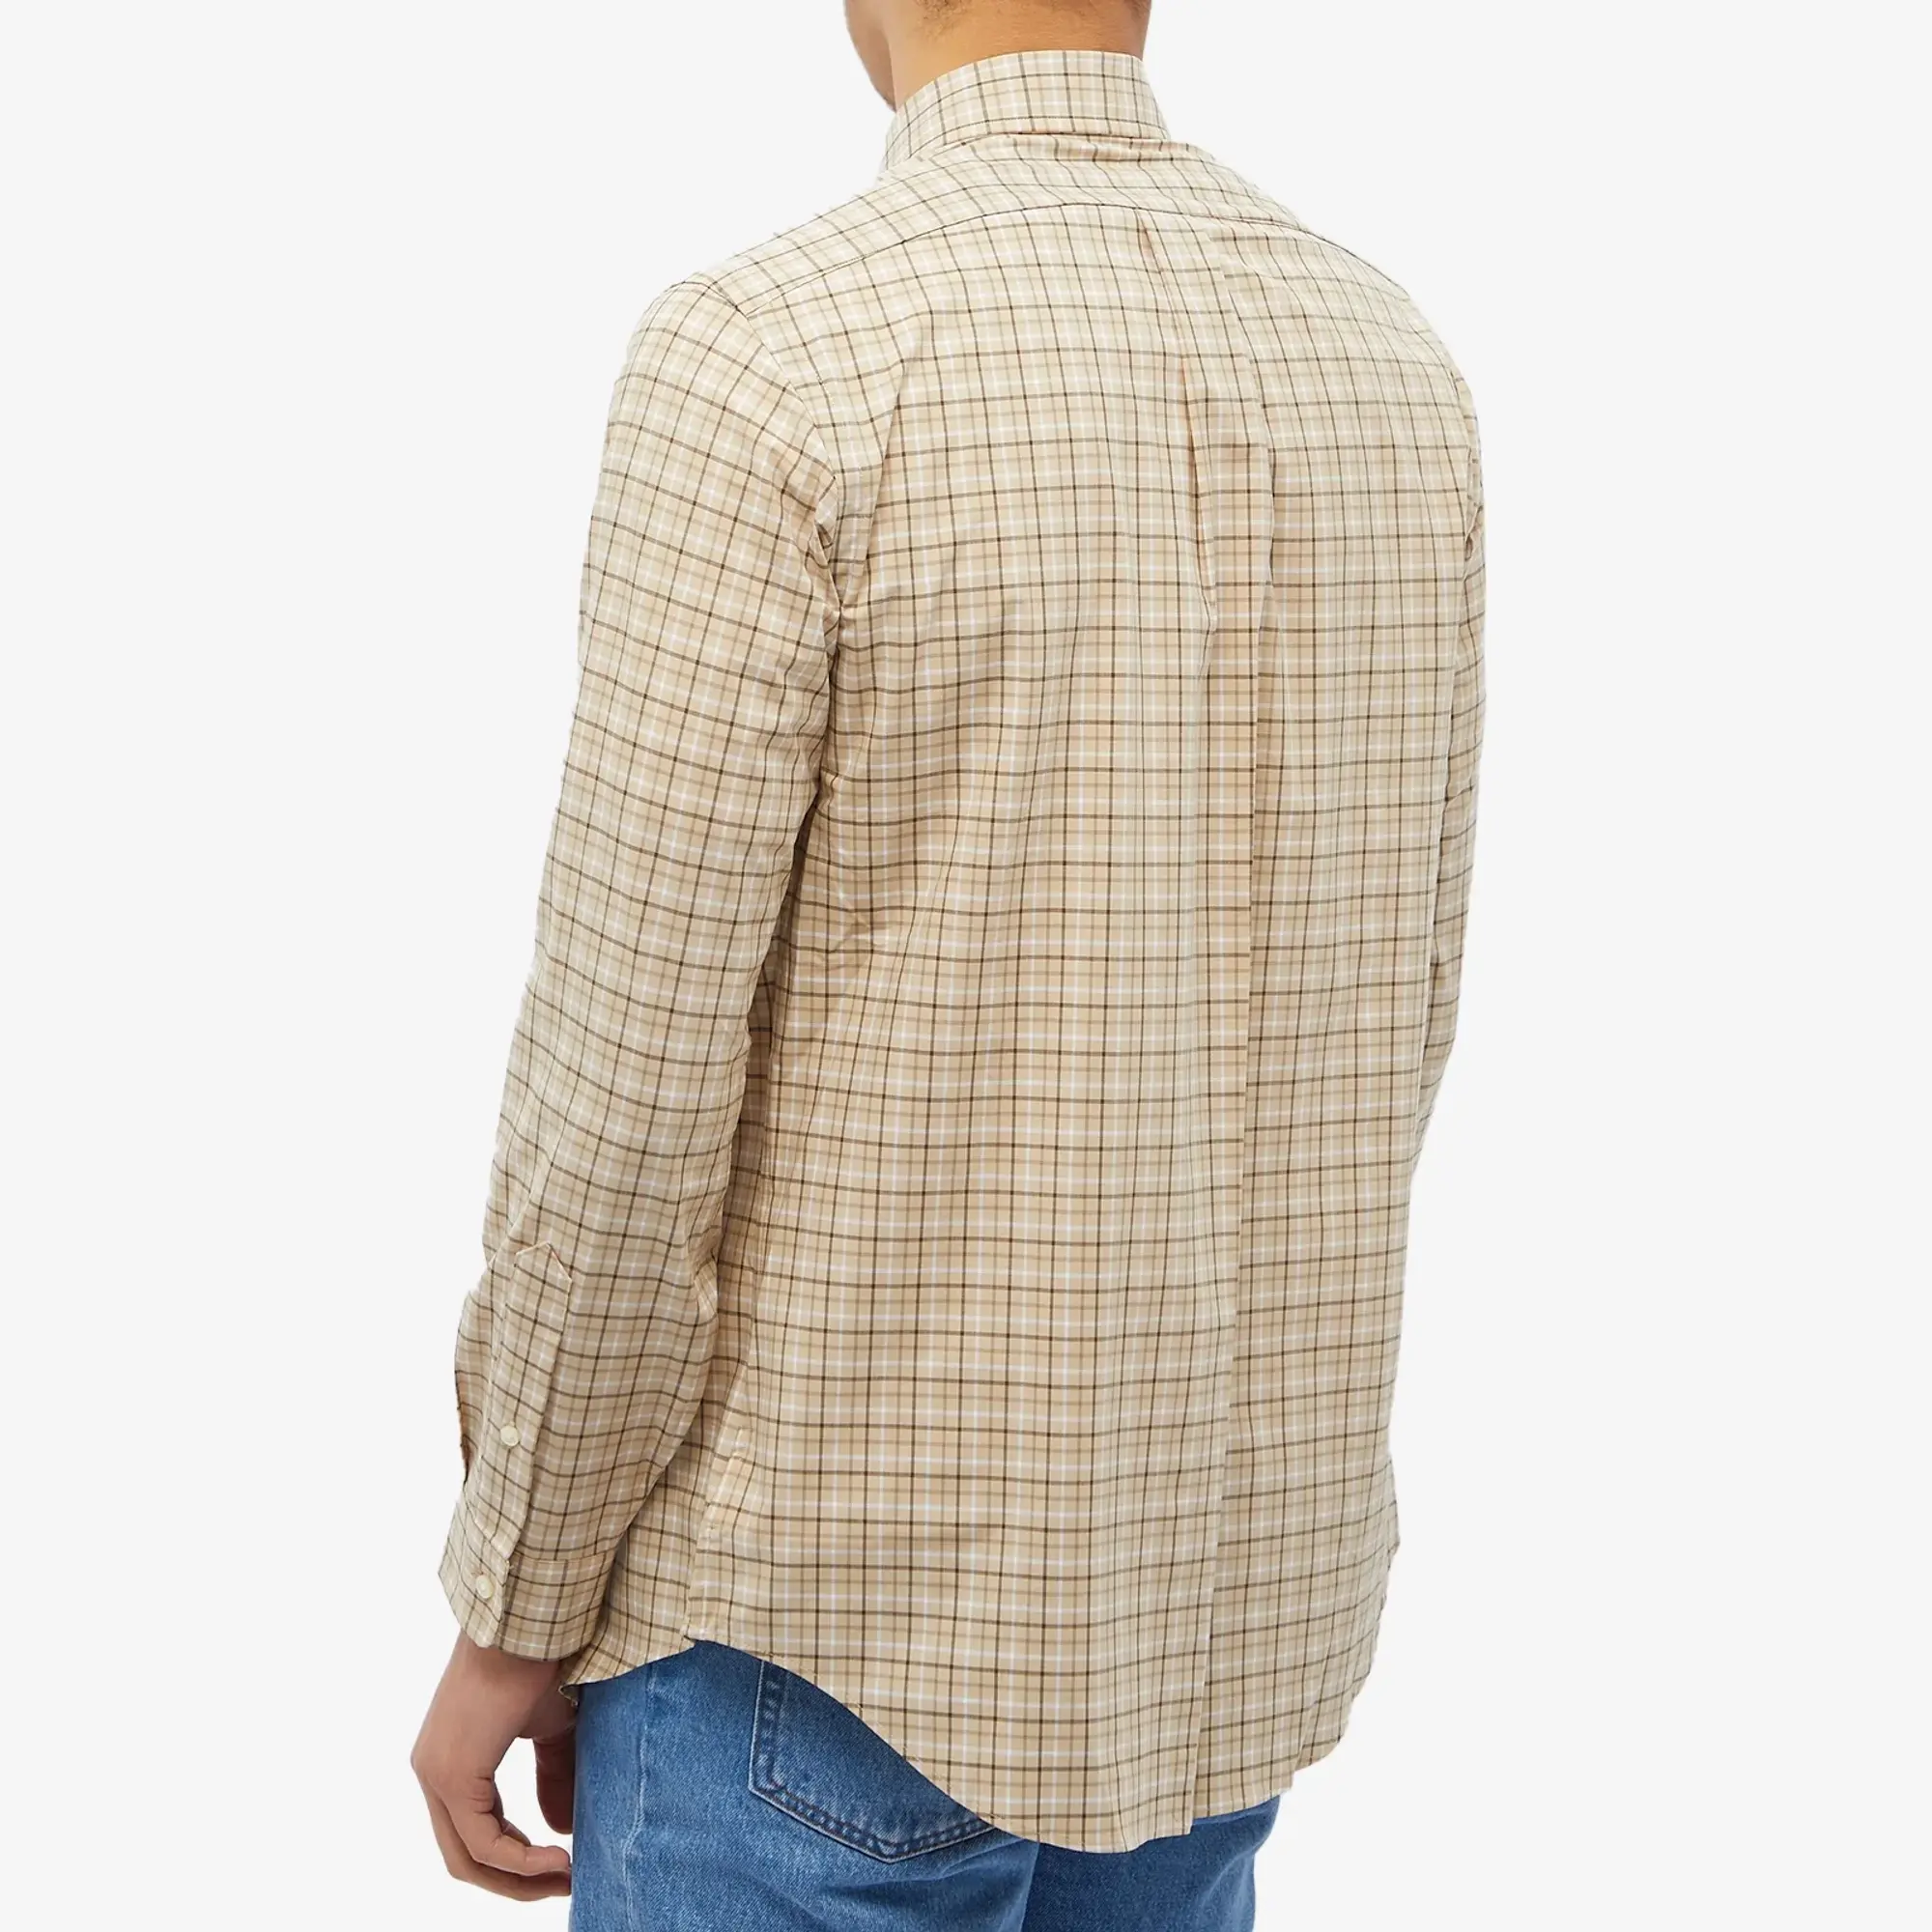 Polo Ralph Lauren Men's Long Sleeve Checked Shirt Khaki Multi